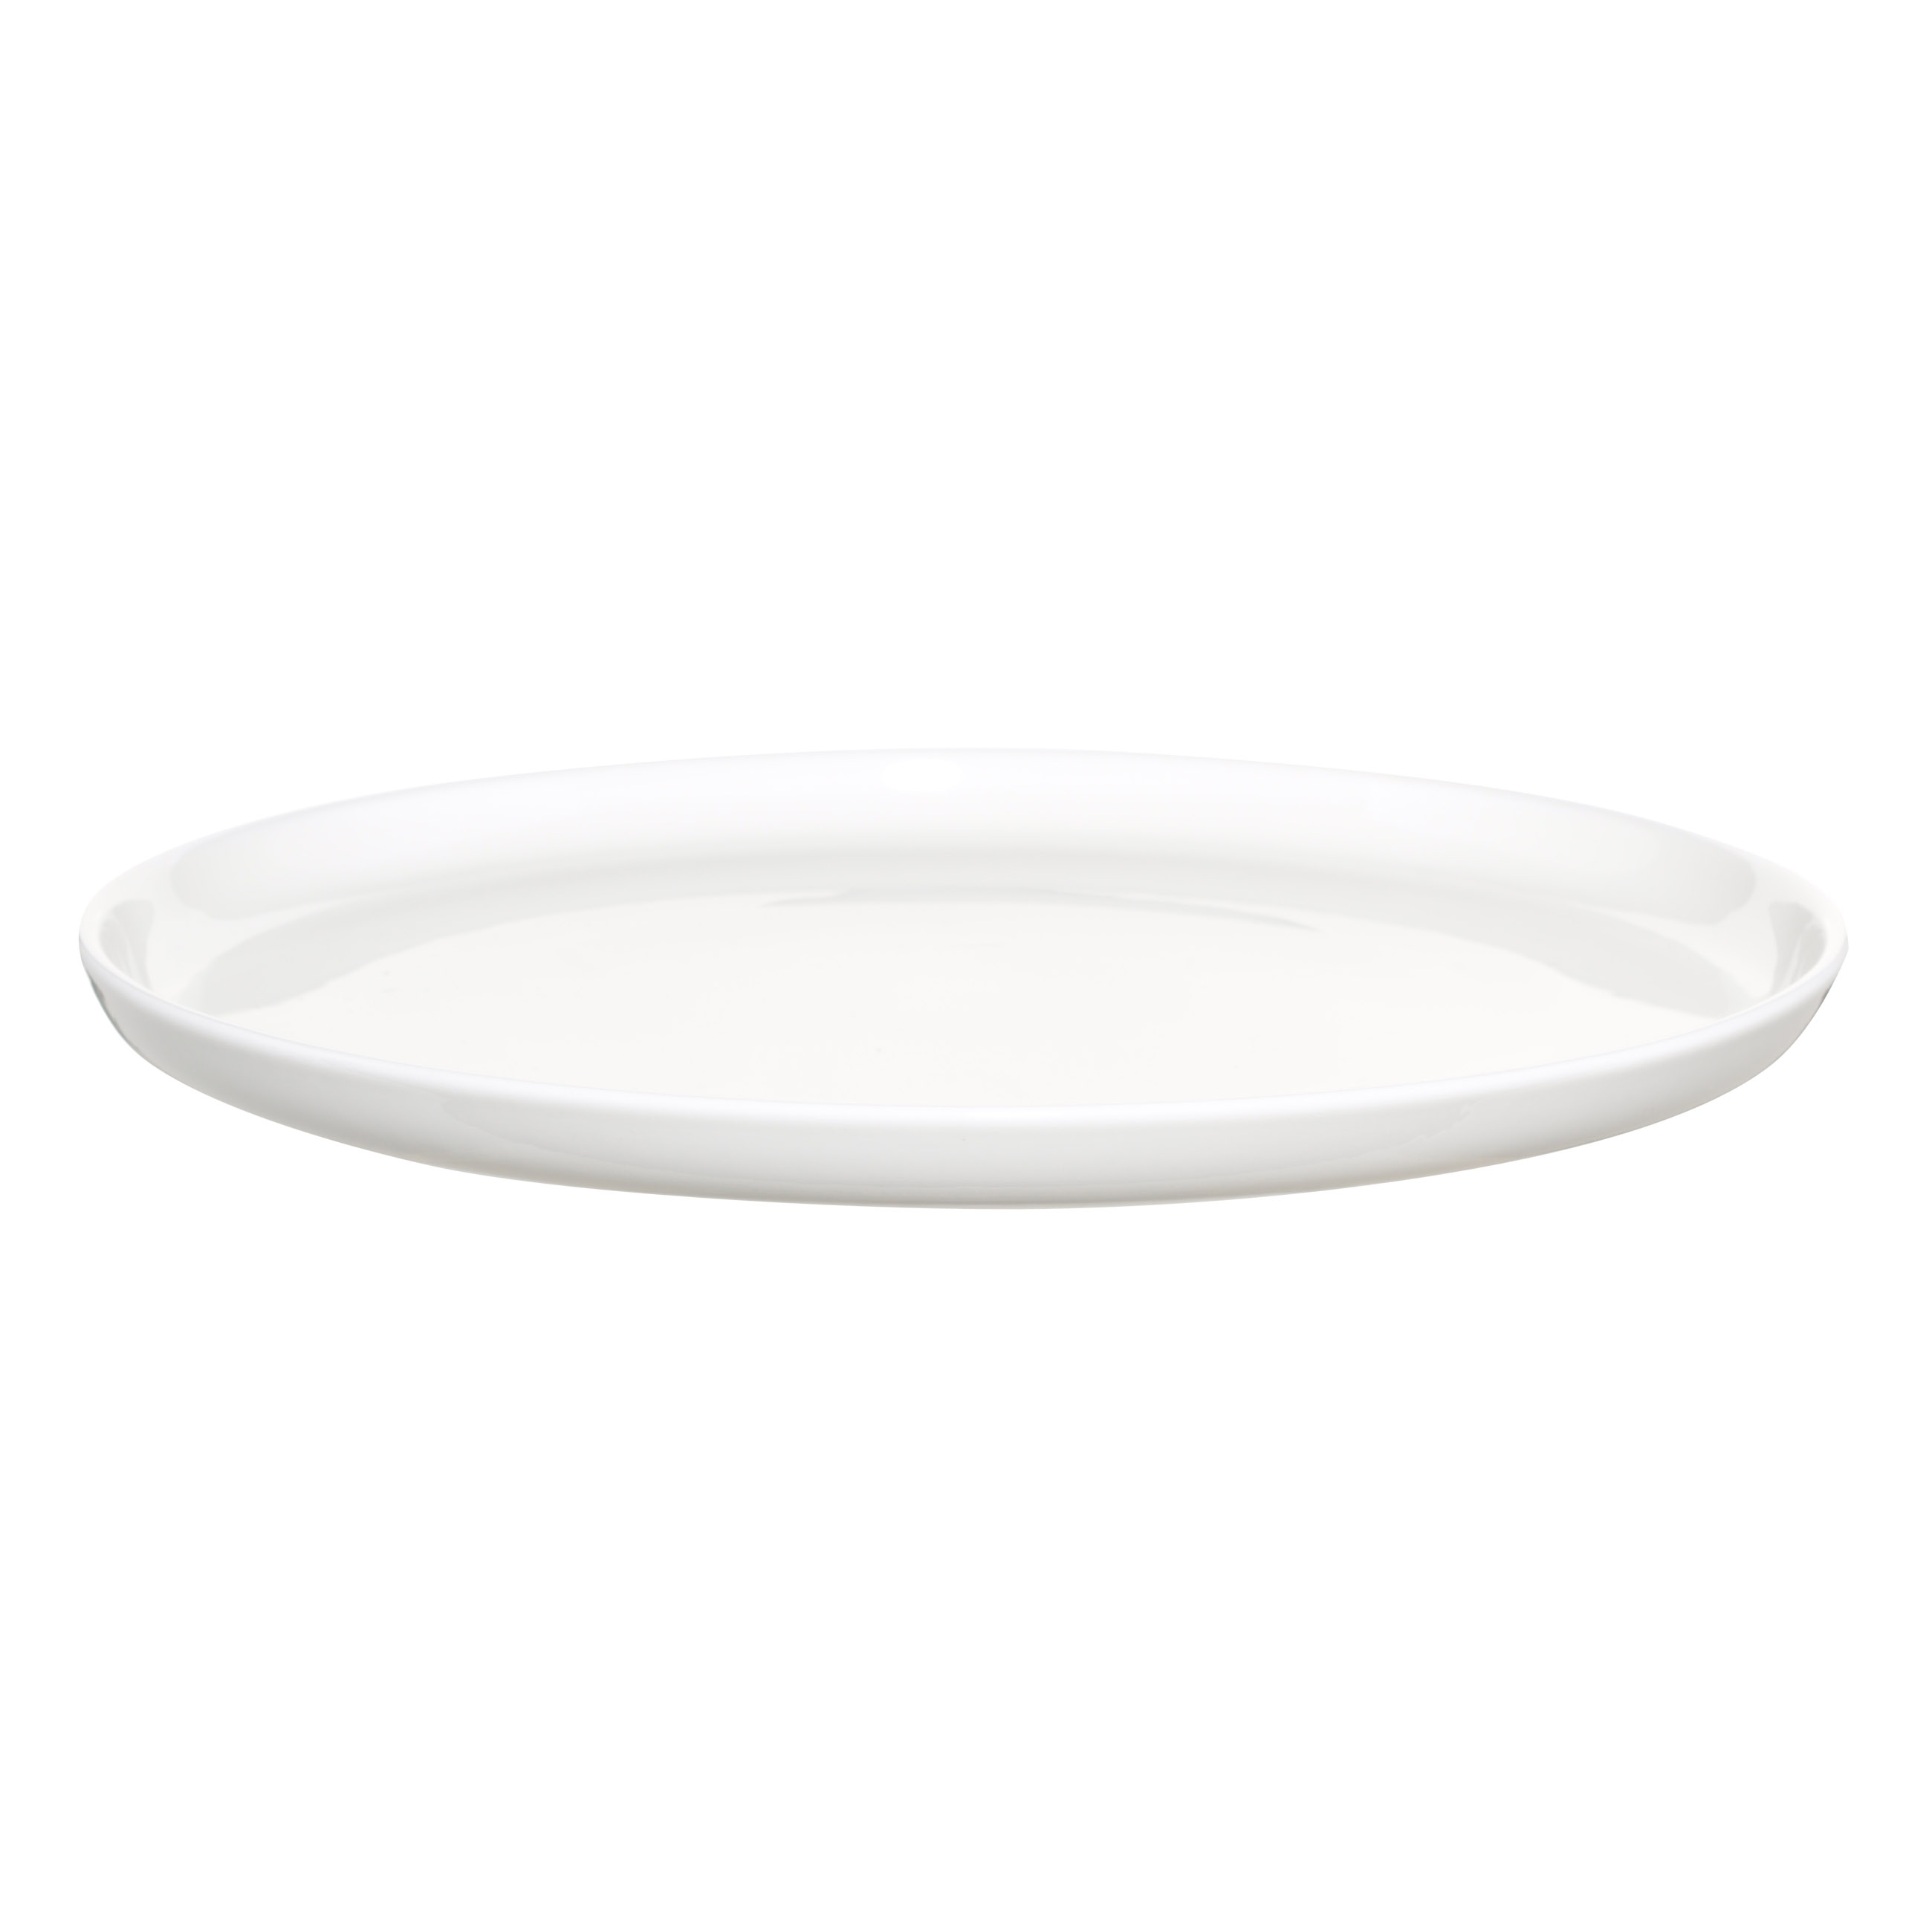 Dining plate, 26 cm, porcelain F, white, Ideal white изображение № 2